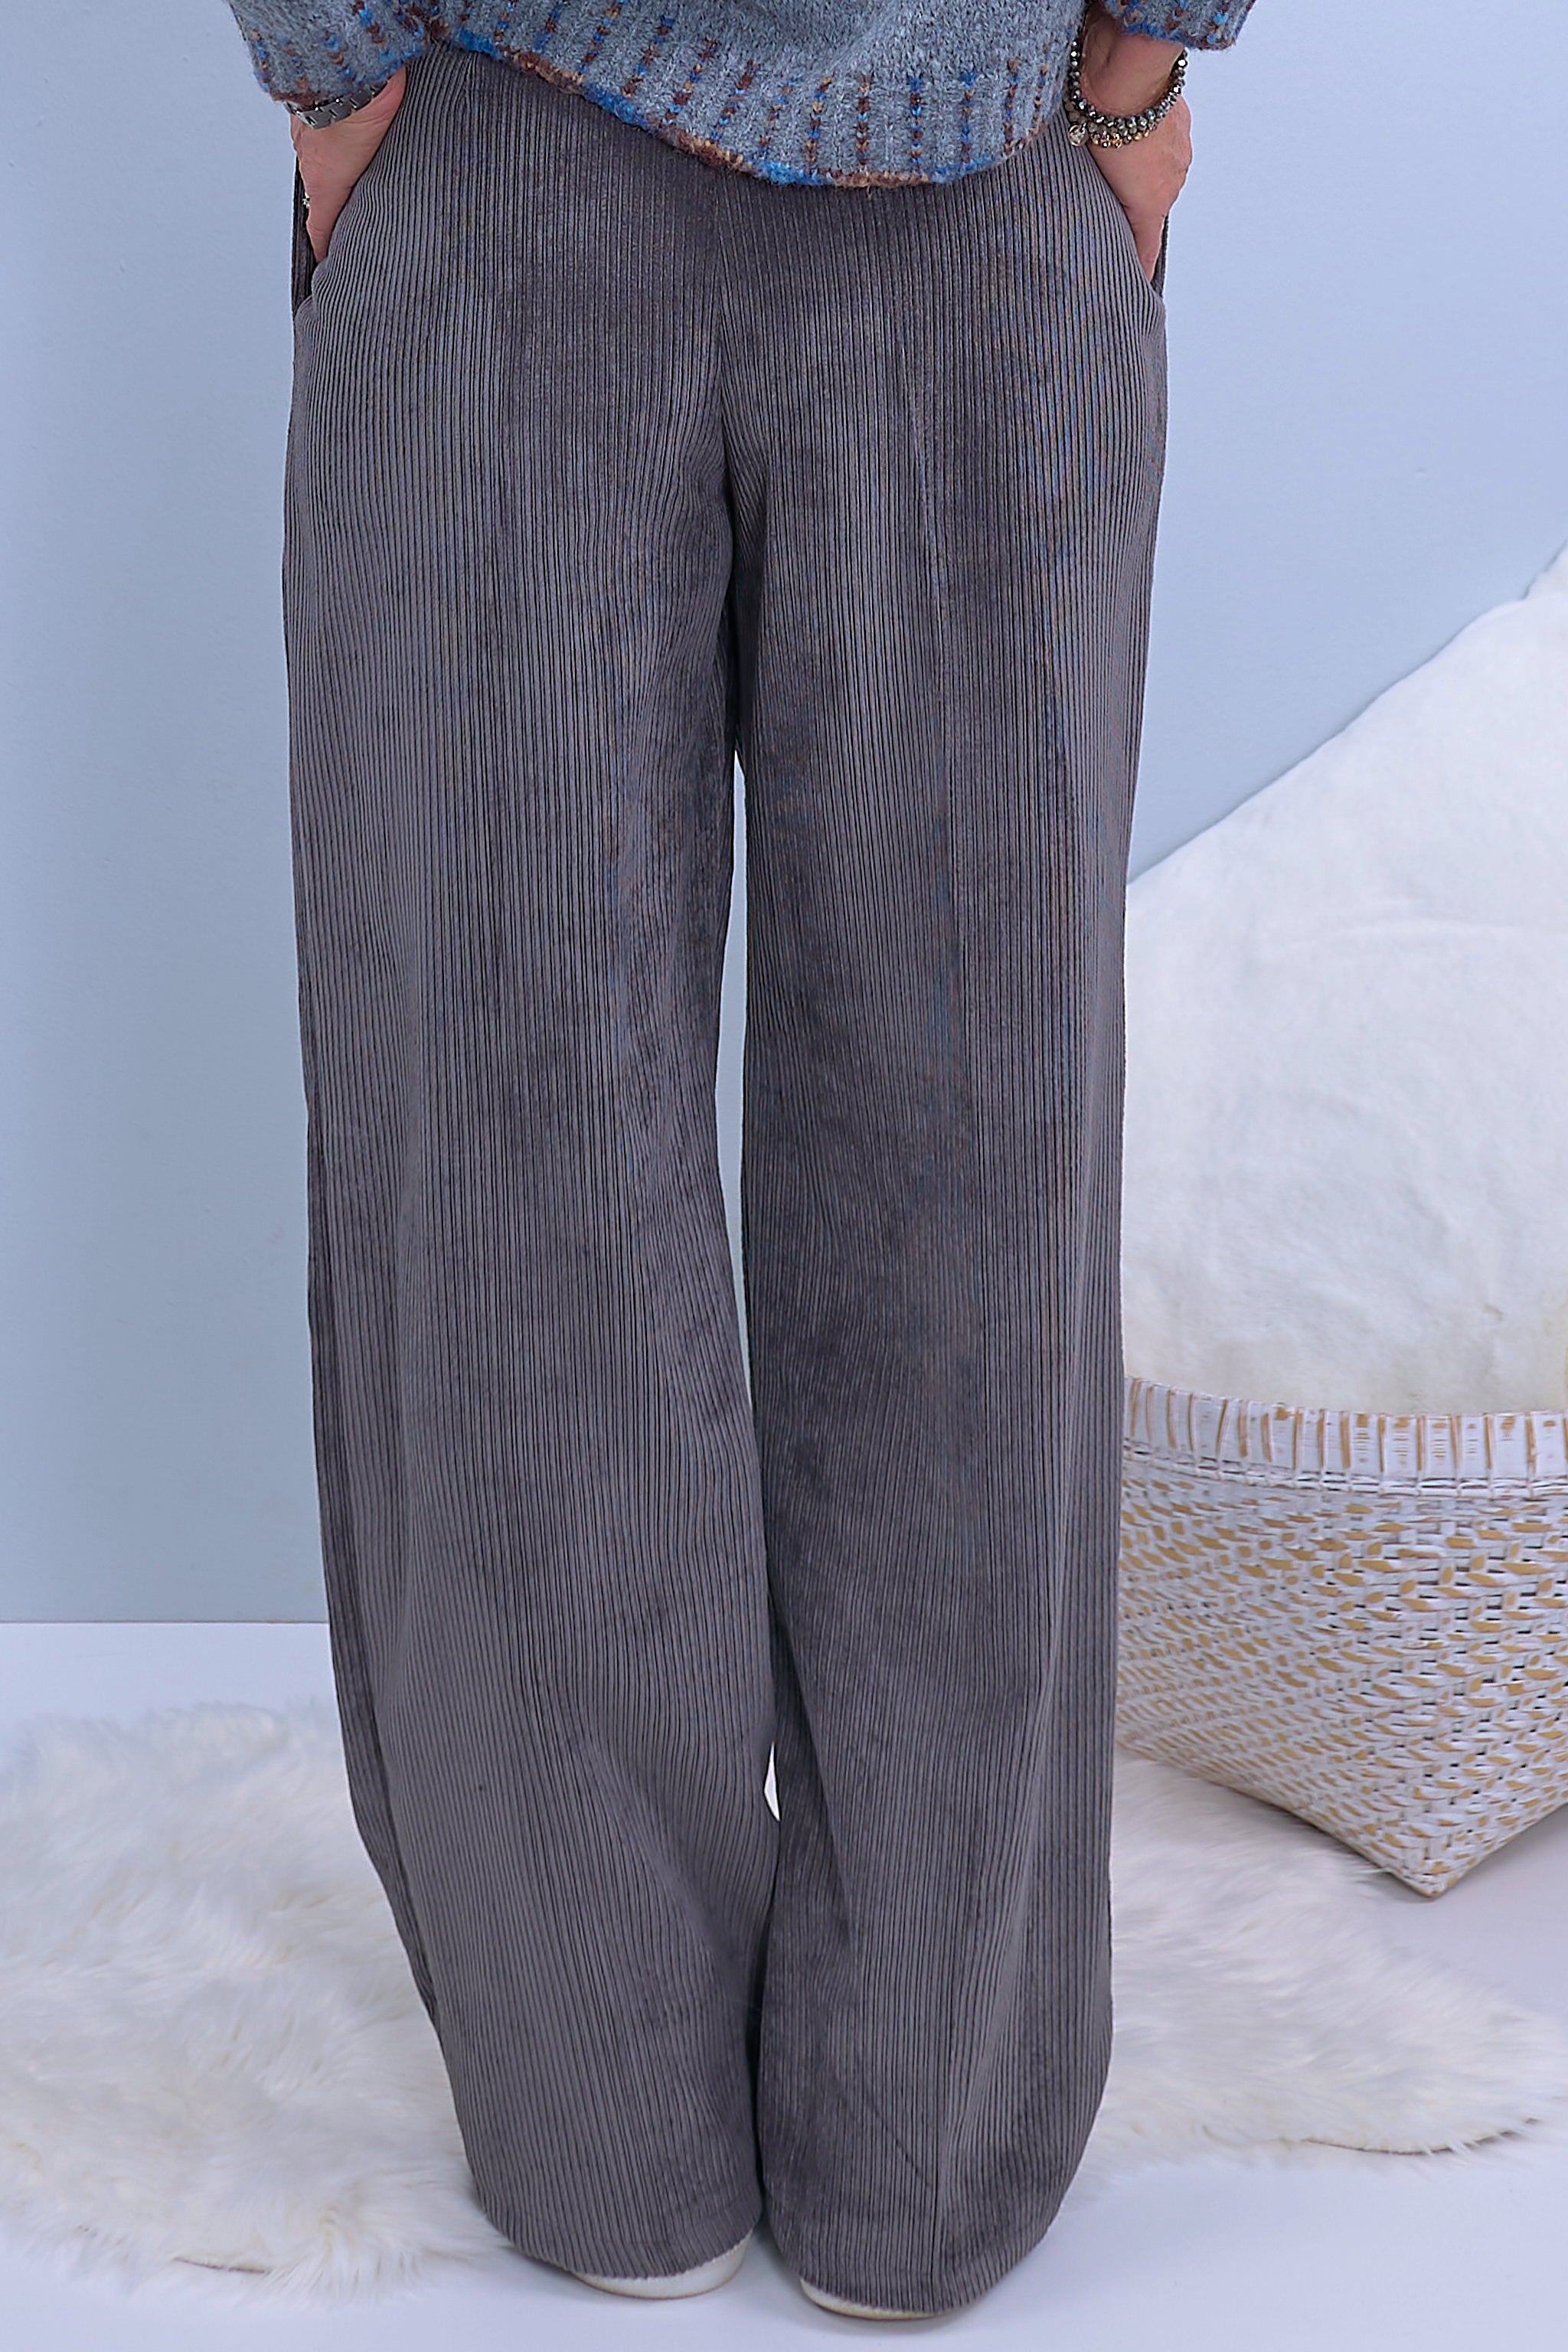 Corduroy palazzo pants with pleats, dark grey